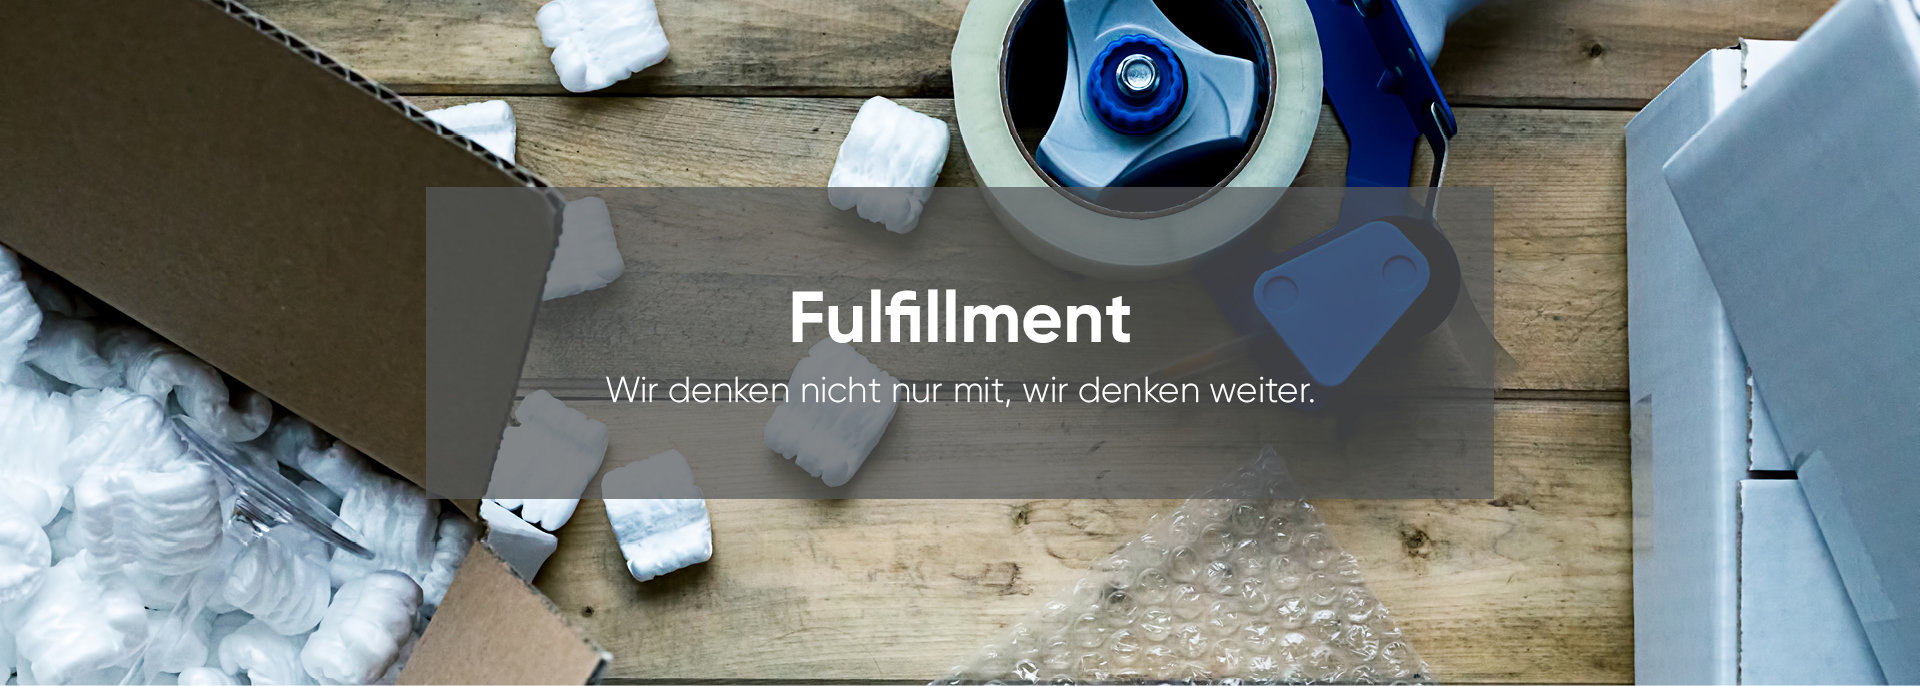 Fulfillment by Deventer